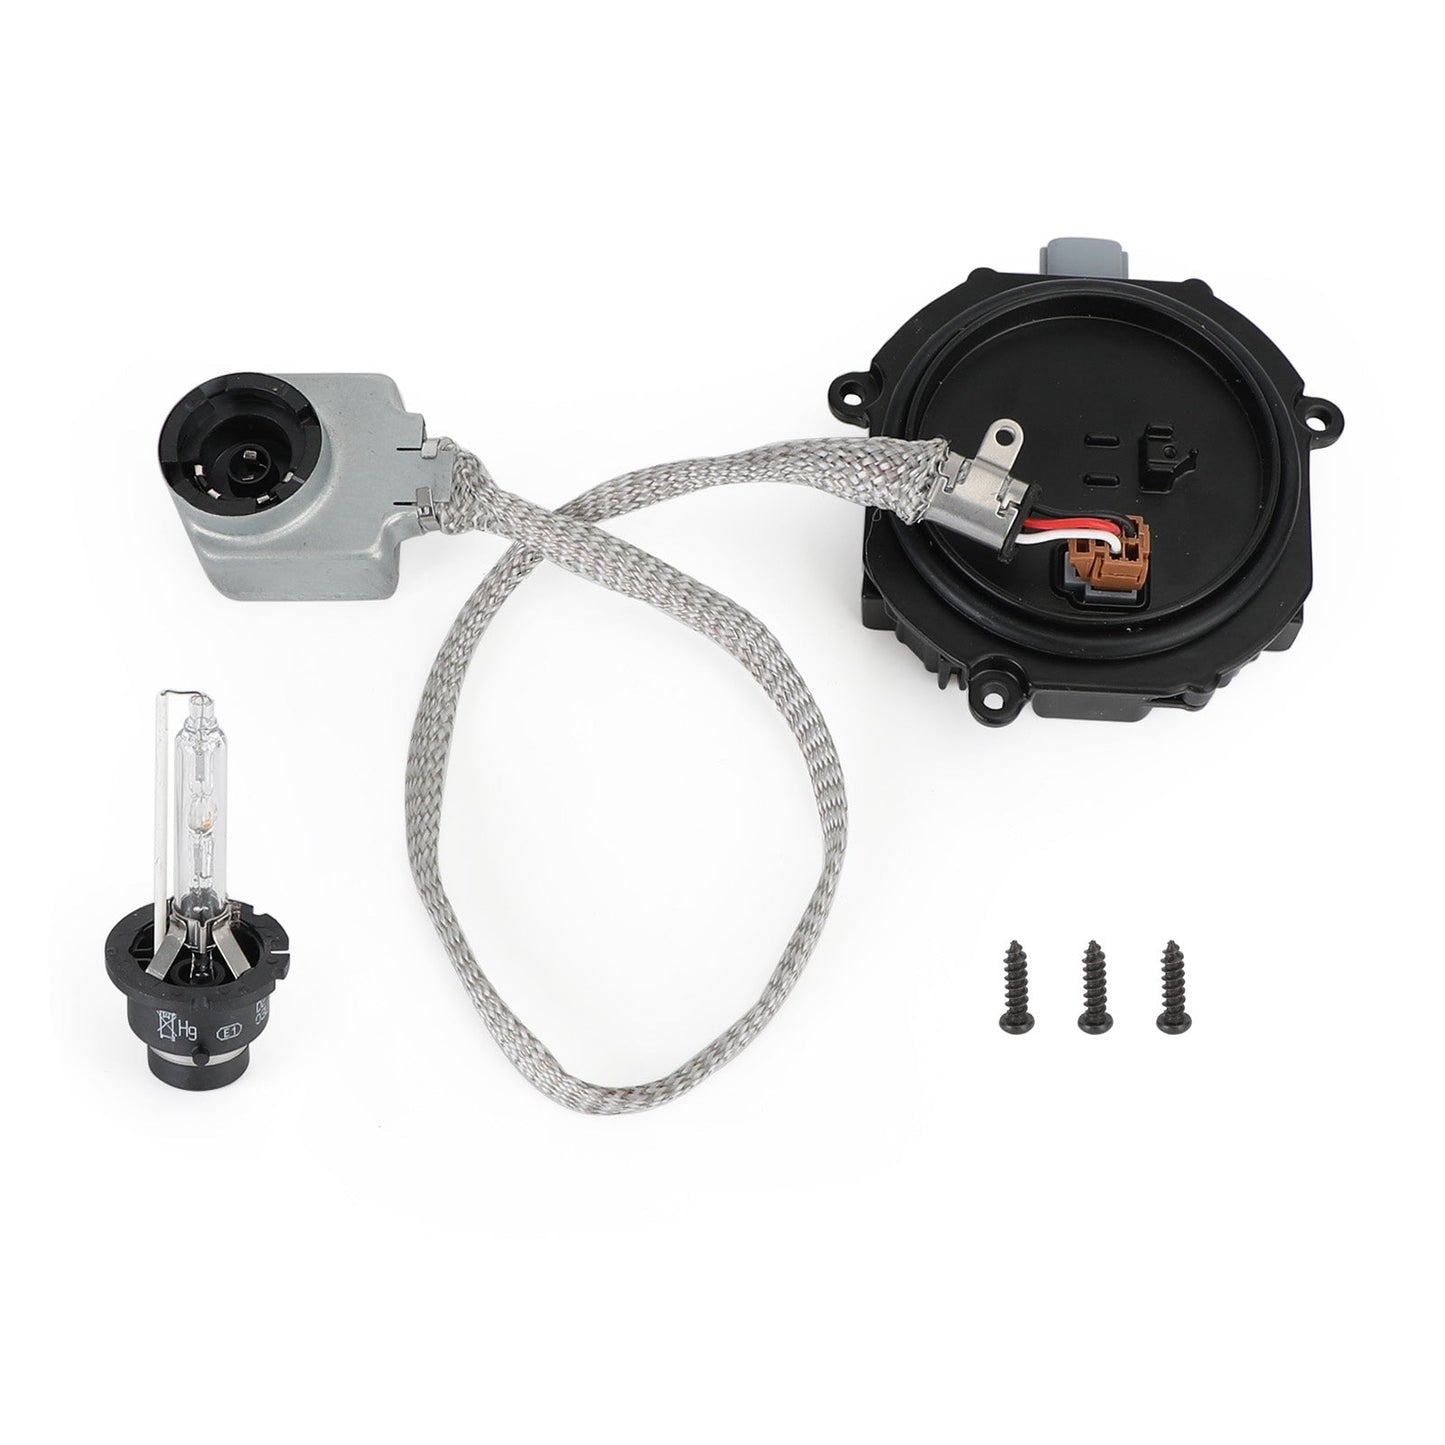 Xenon Ballast Igniter&HID D2S Bulb Kit Computer Control BBM5510H3 For Mazda 3 6